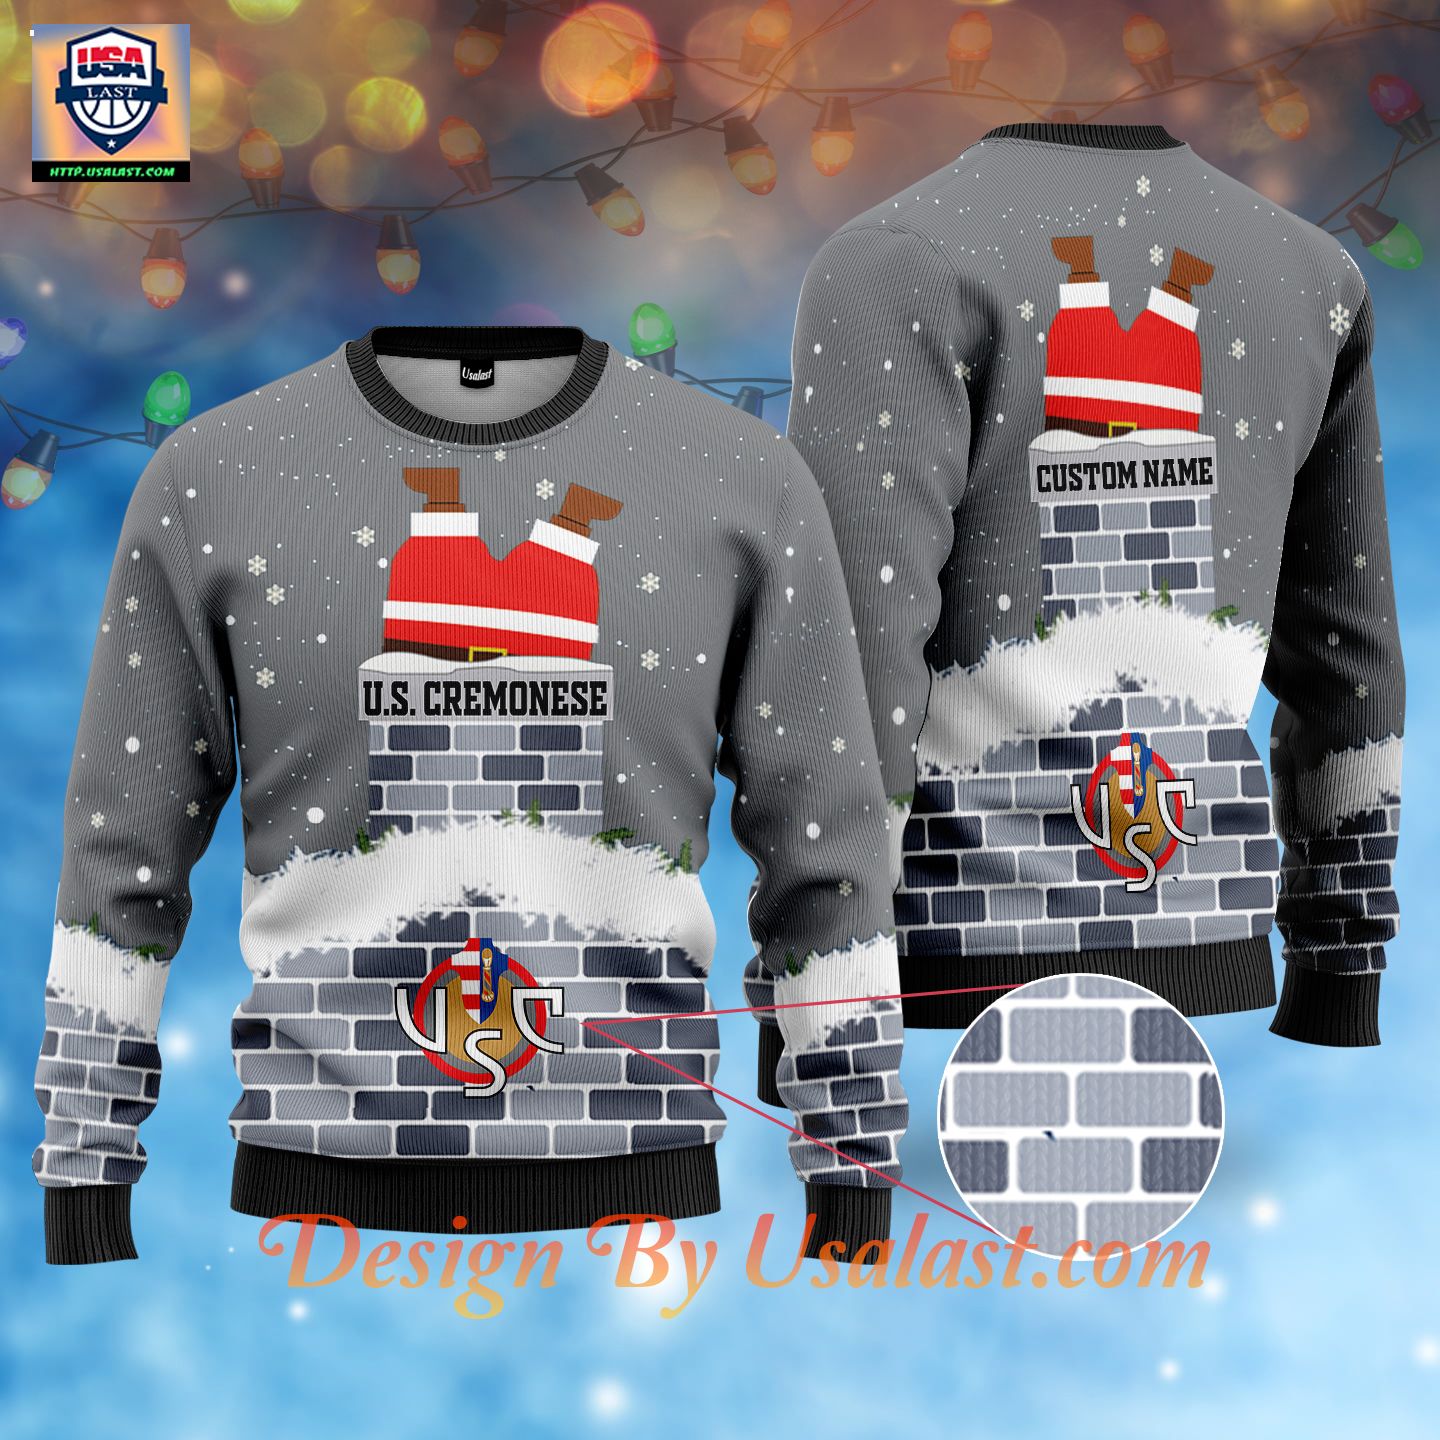 Best Selling U.S Cremonese Santa Claus Custom Name Ugly Christmas Sweater